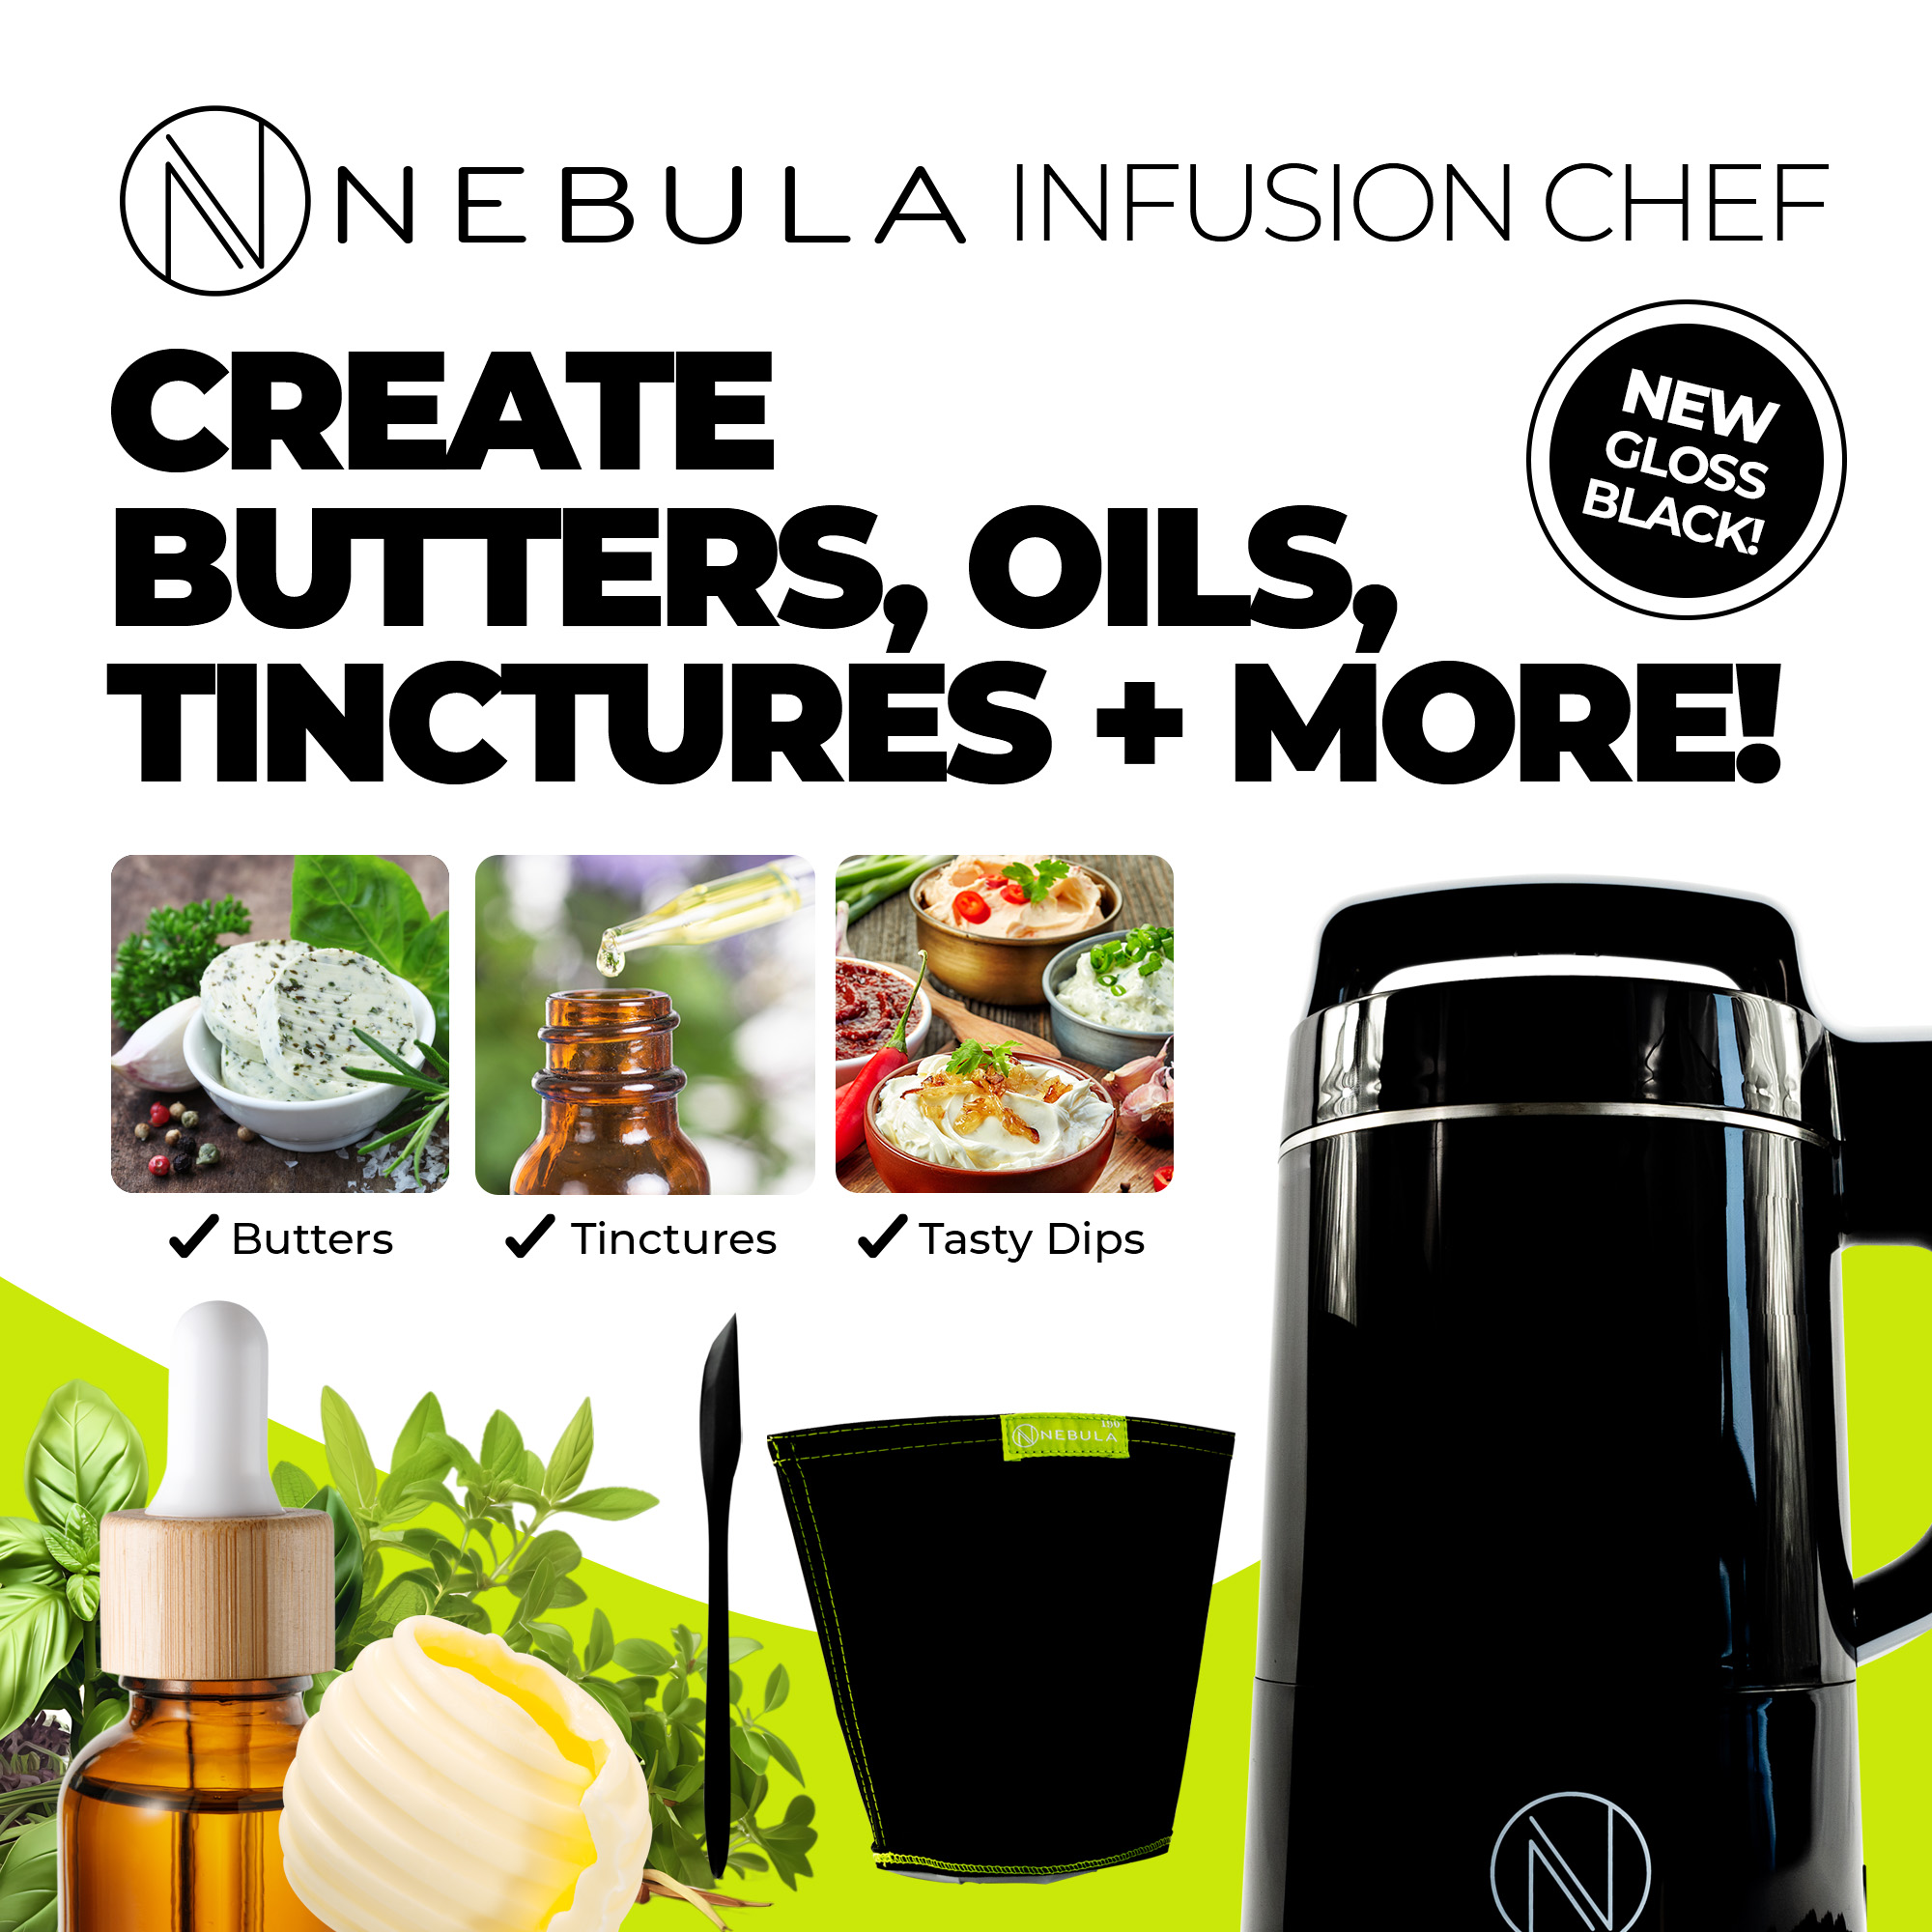 Nebula infusion chef herb